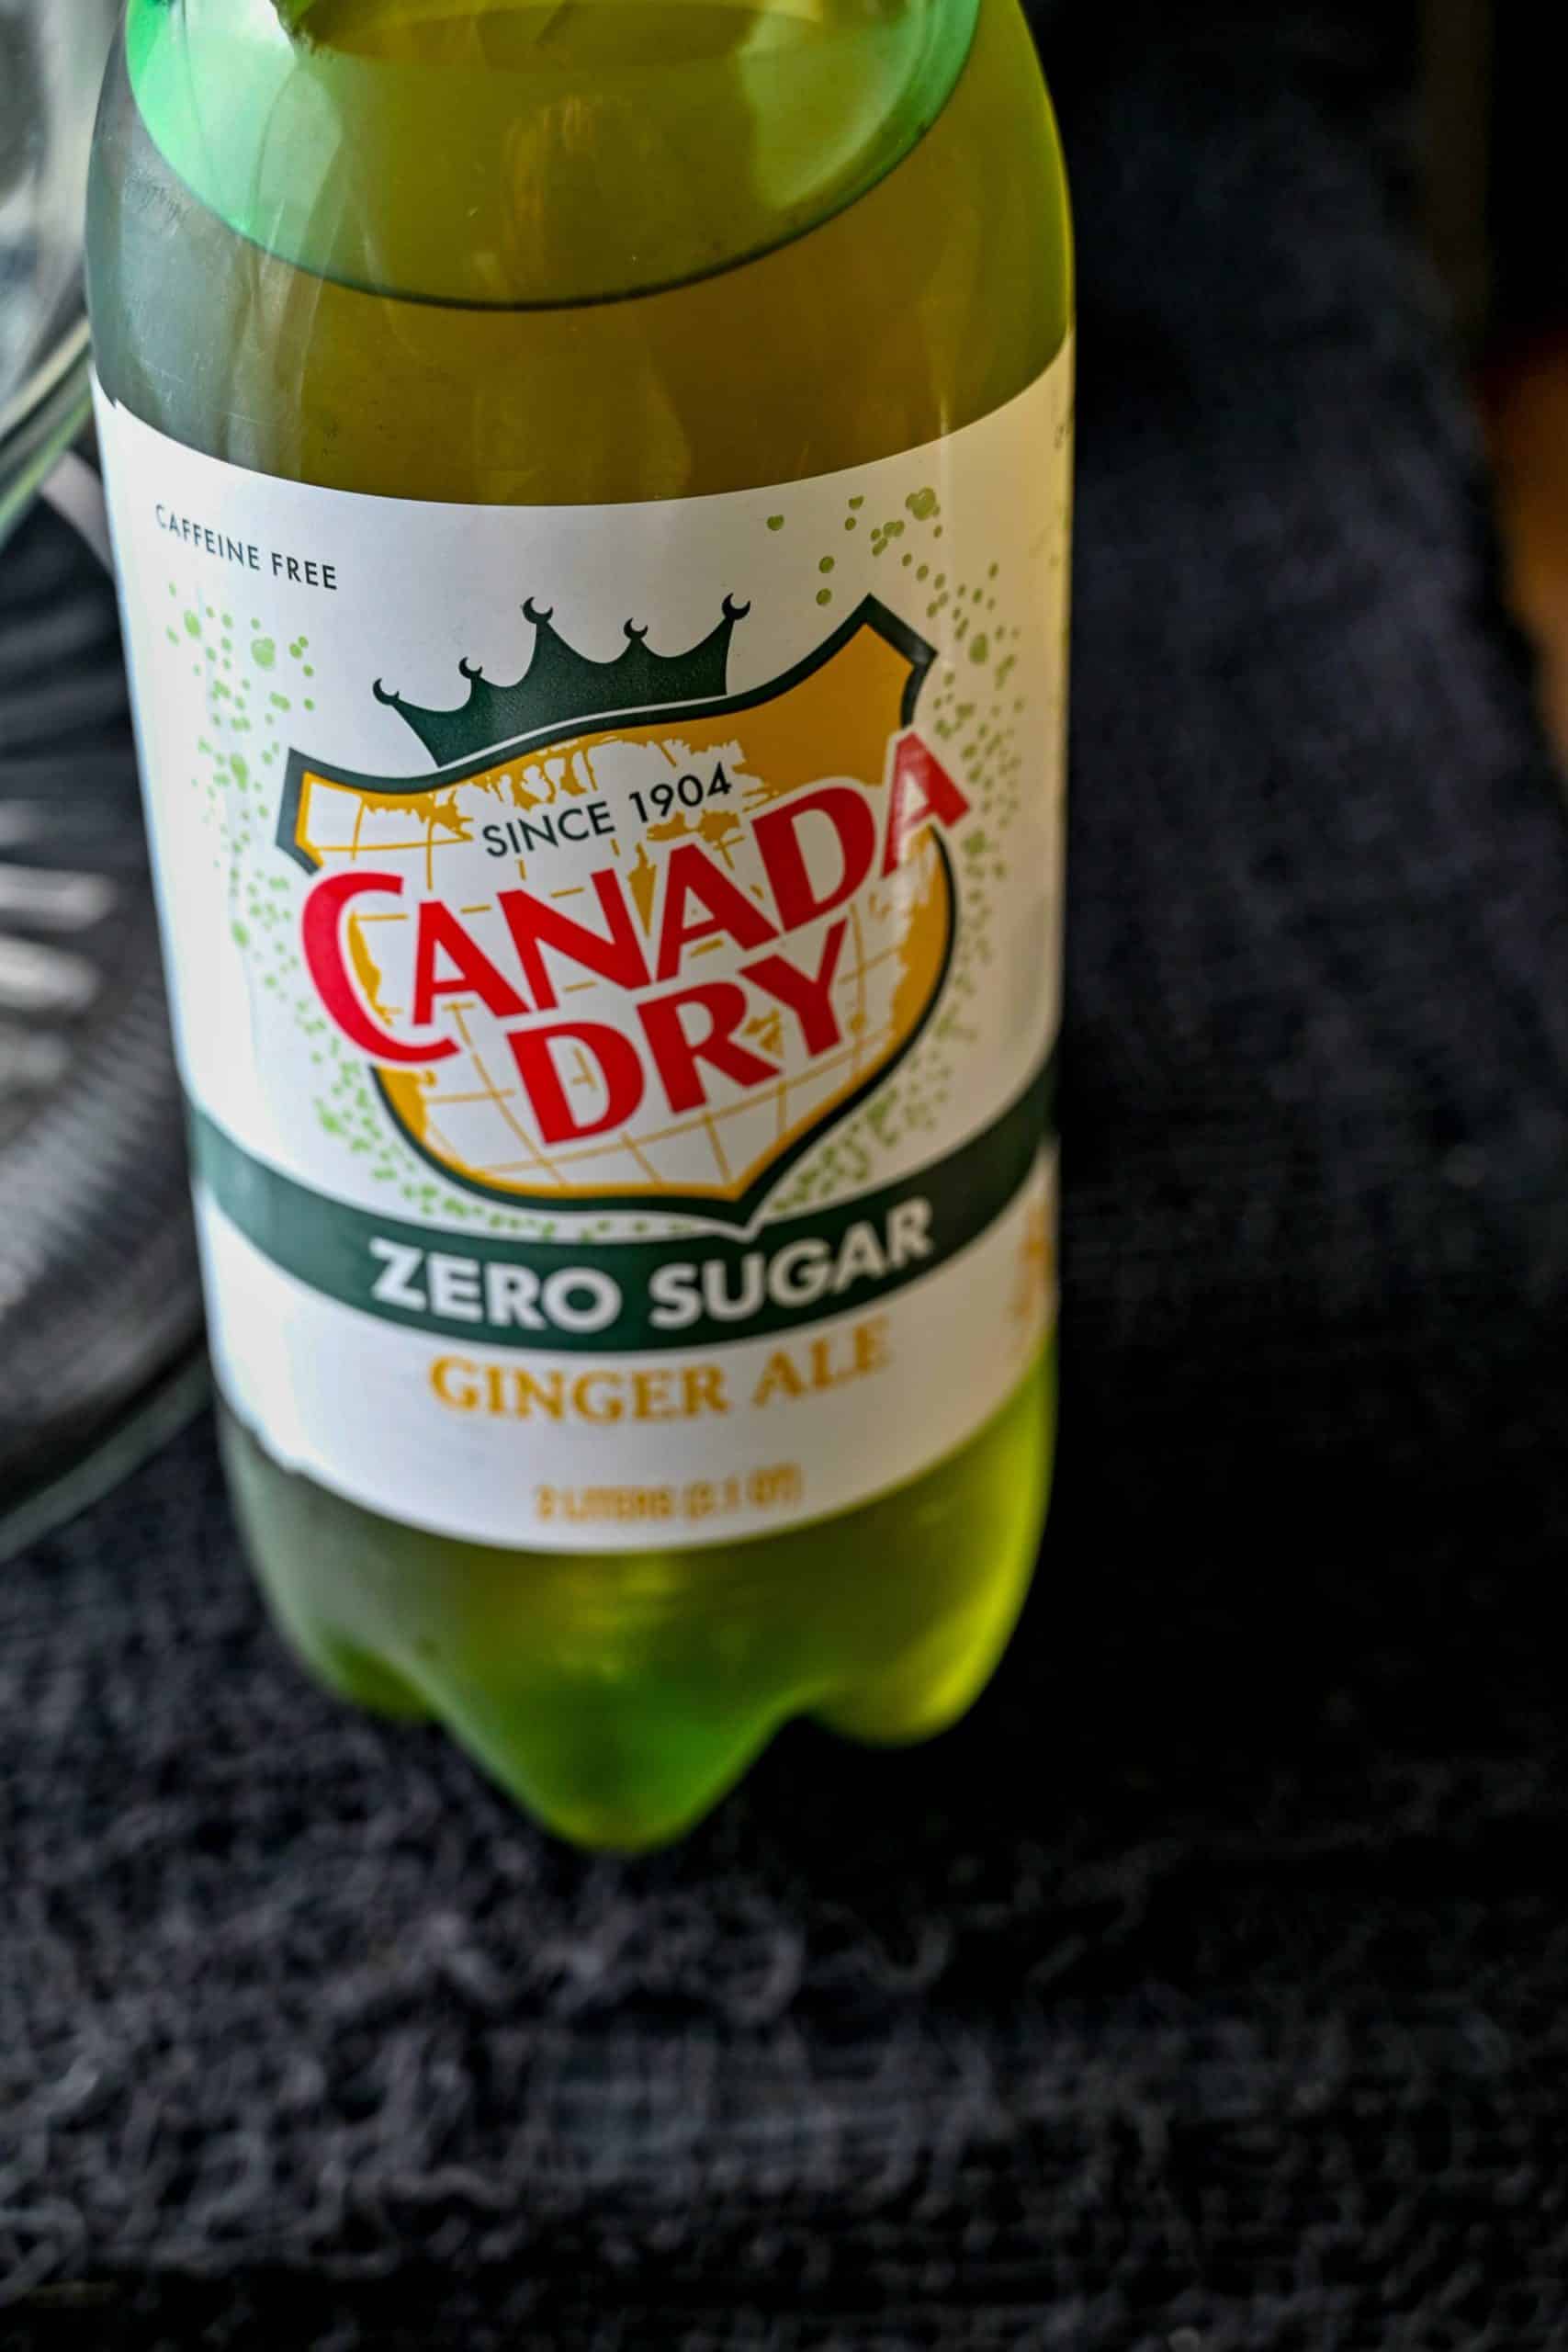 a bottle of zero sugar ginger ale